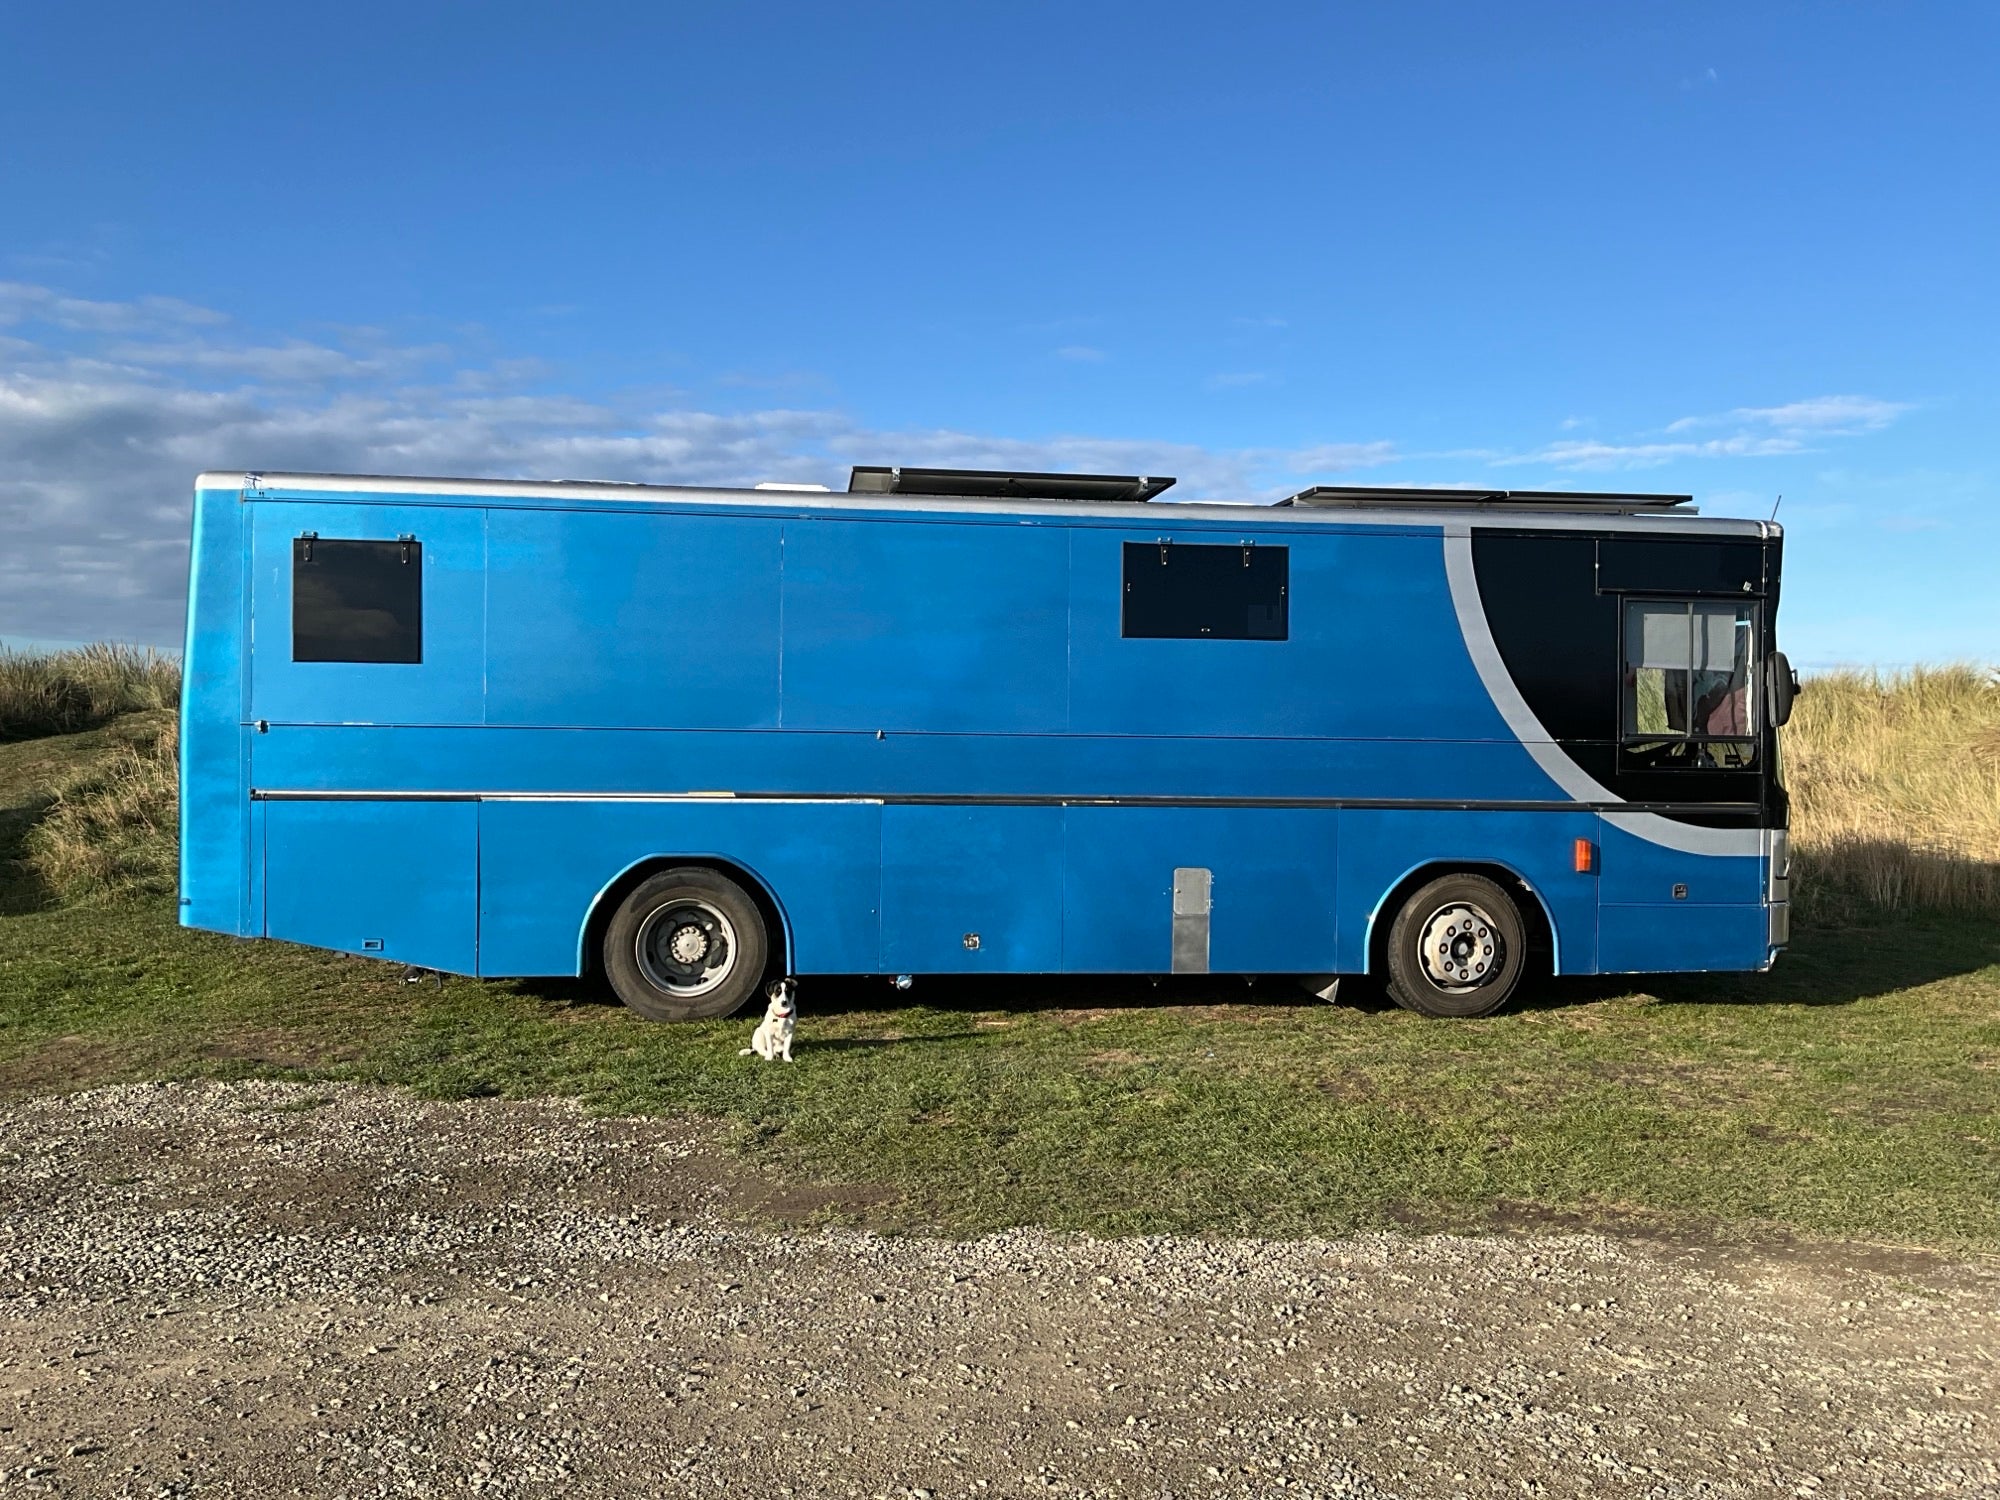 George's Housebus in Dunedin